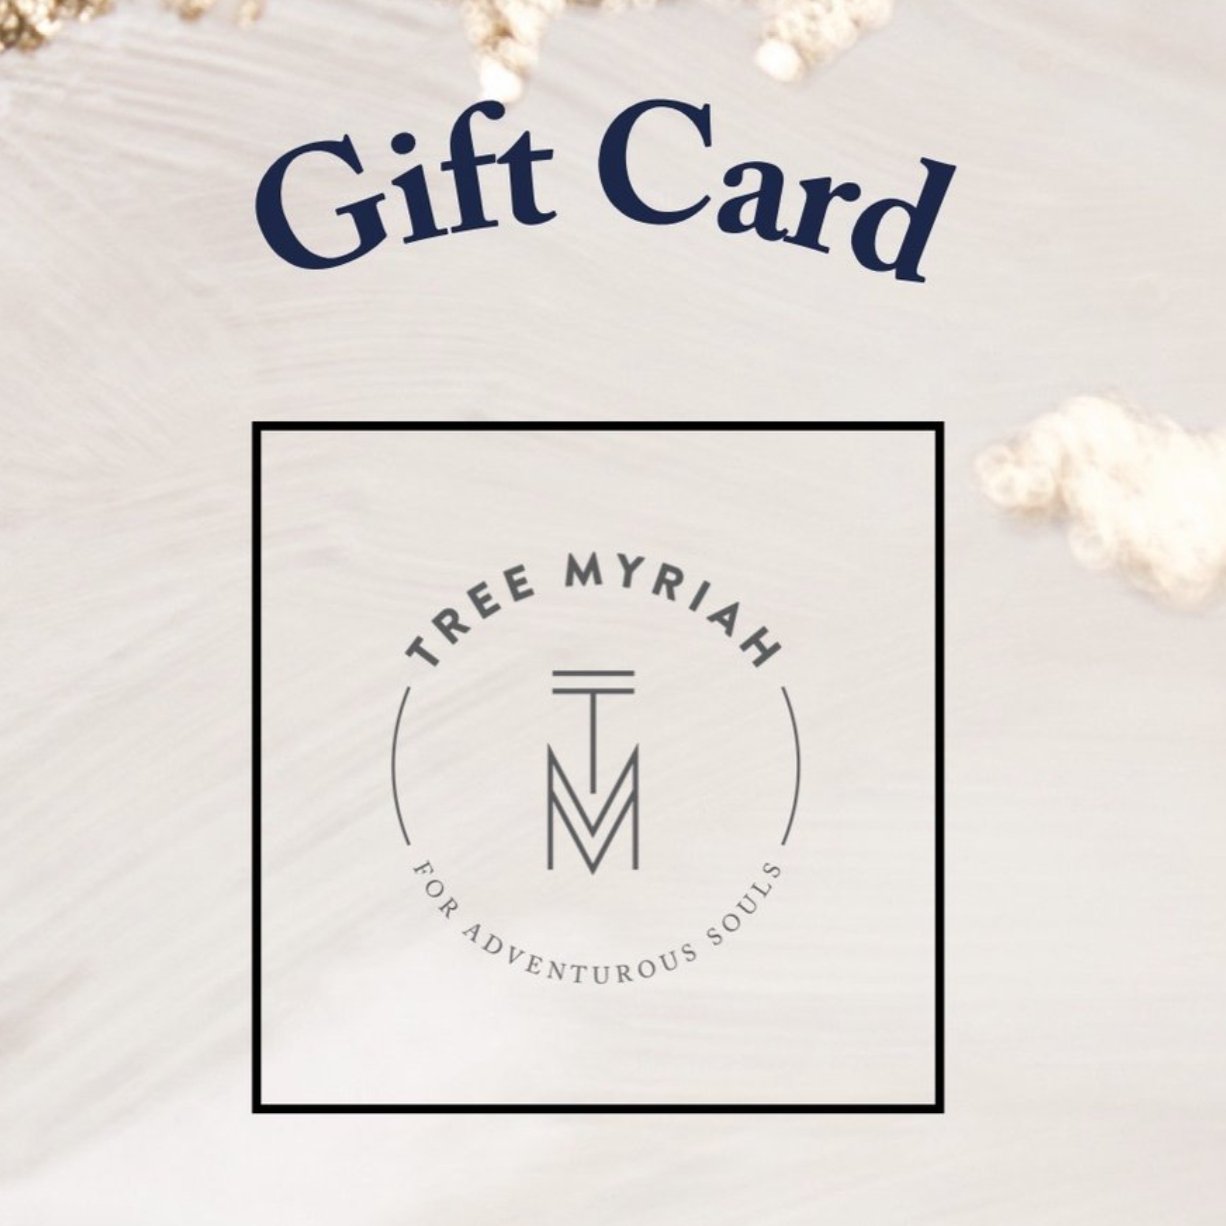 - Gift Card - Tree Myriah